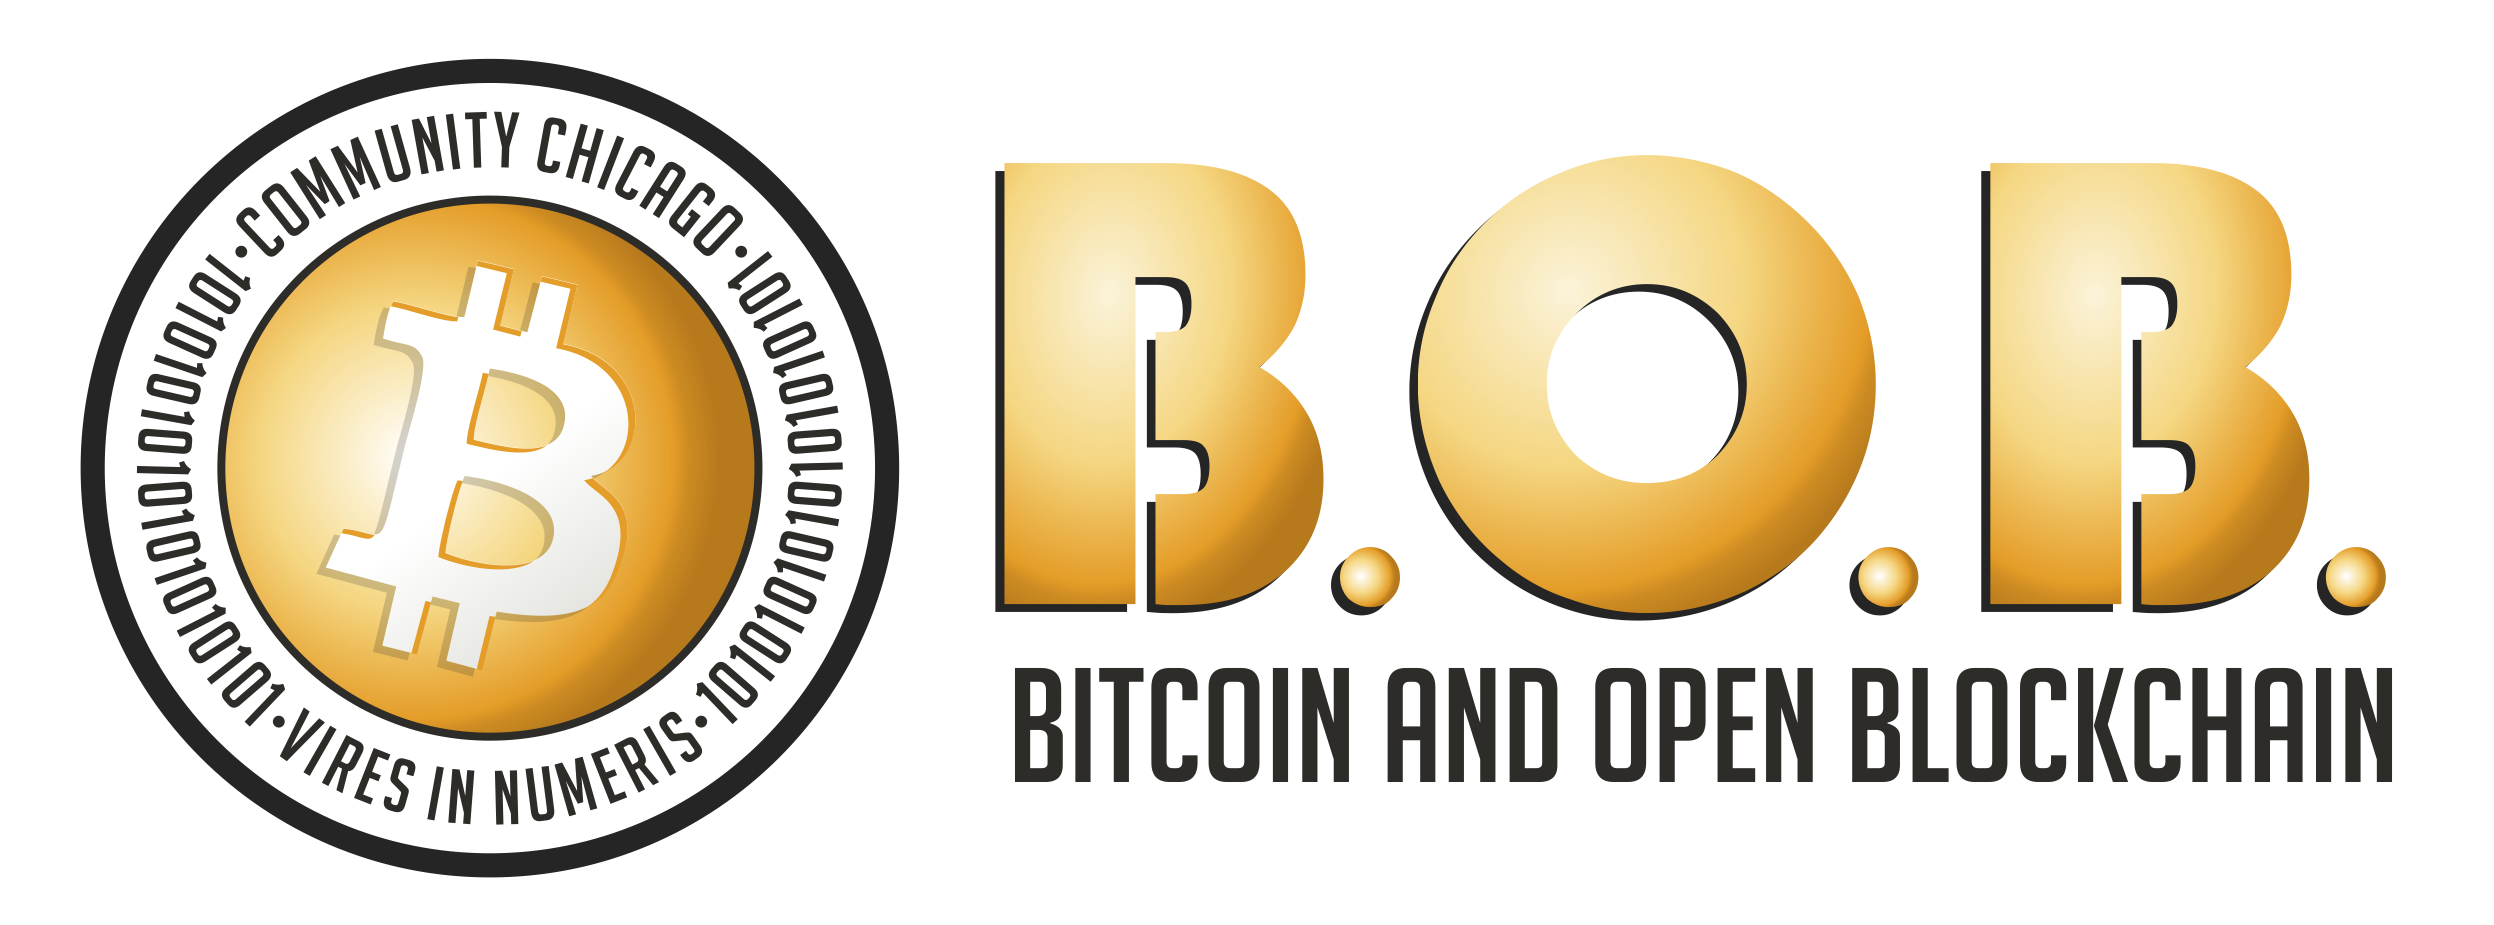 Bitcoin and Open Blockchain Chicago Meetup